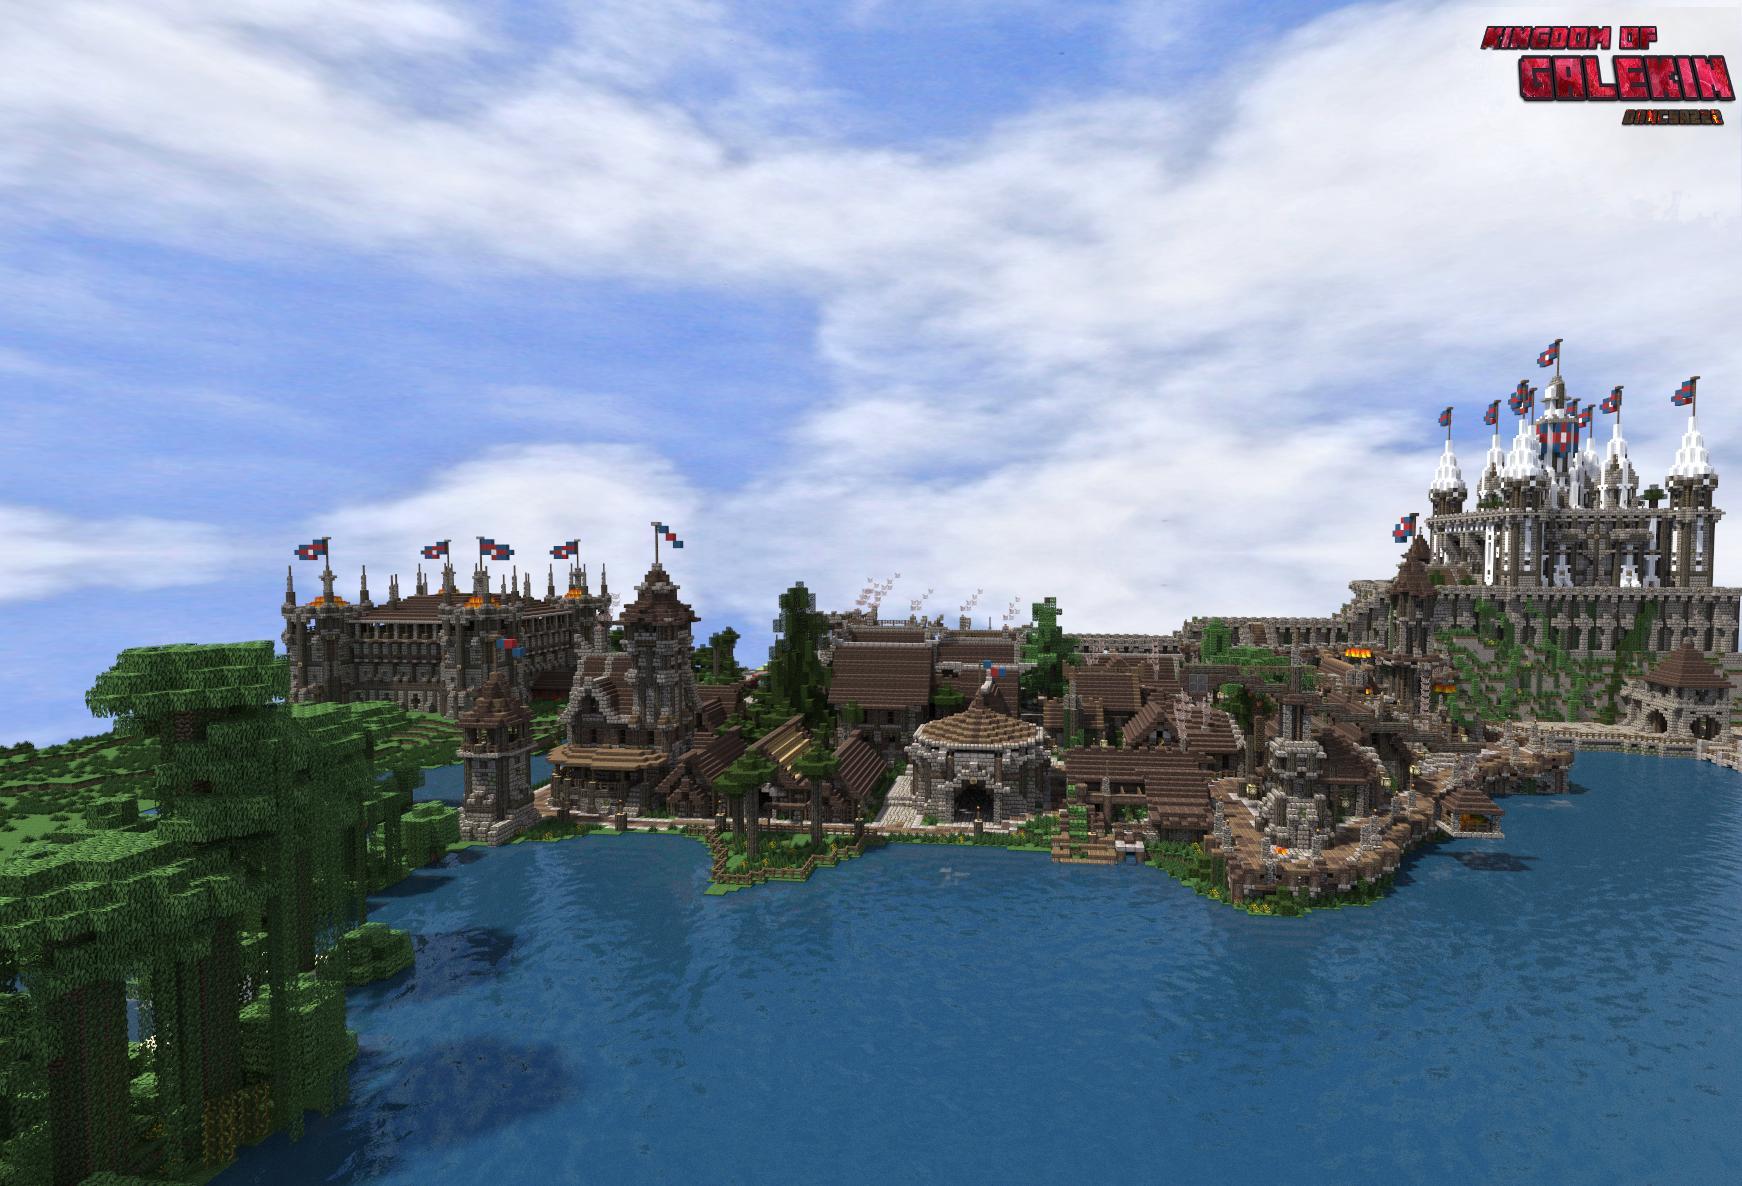 My finished medieval village